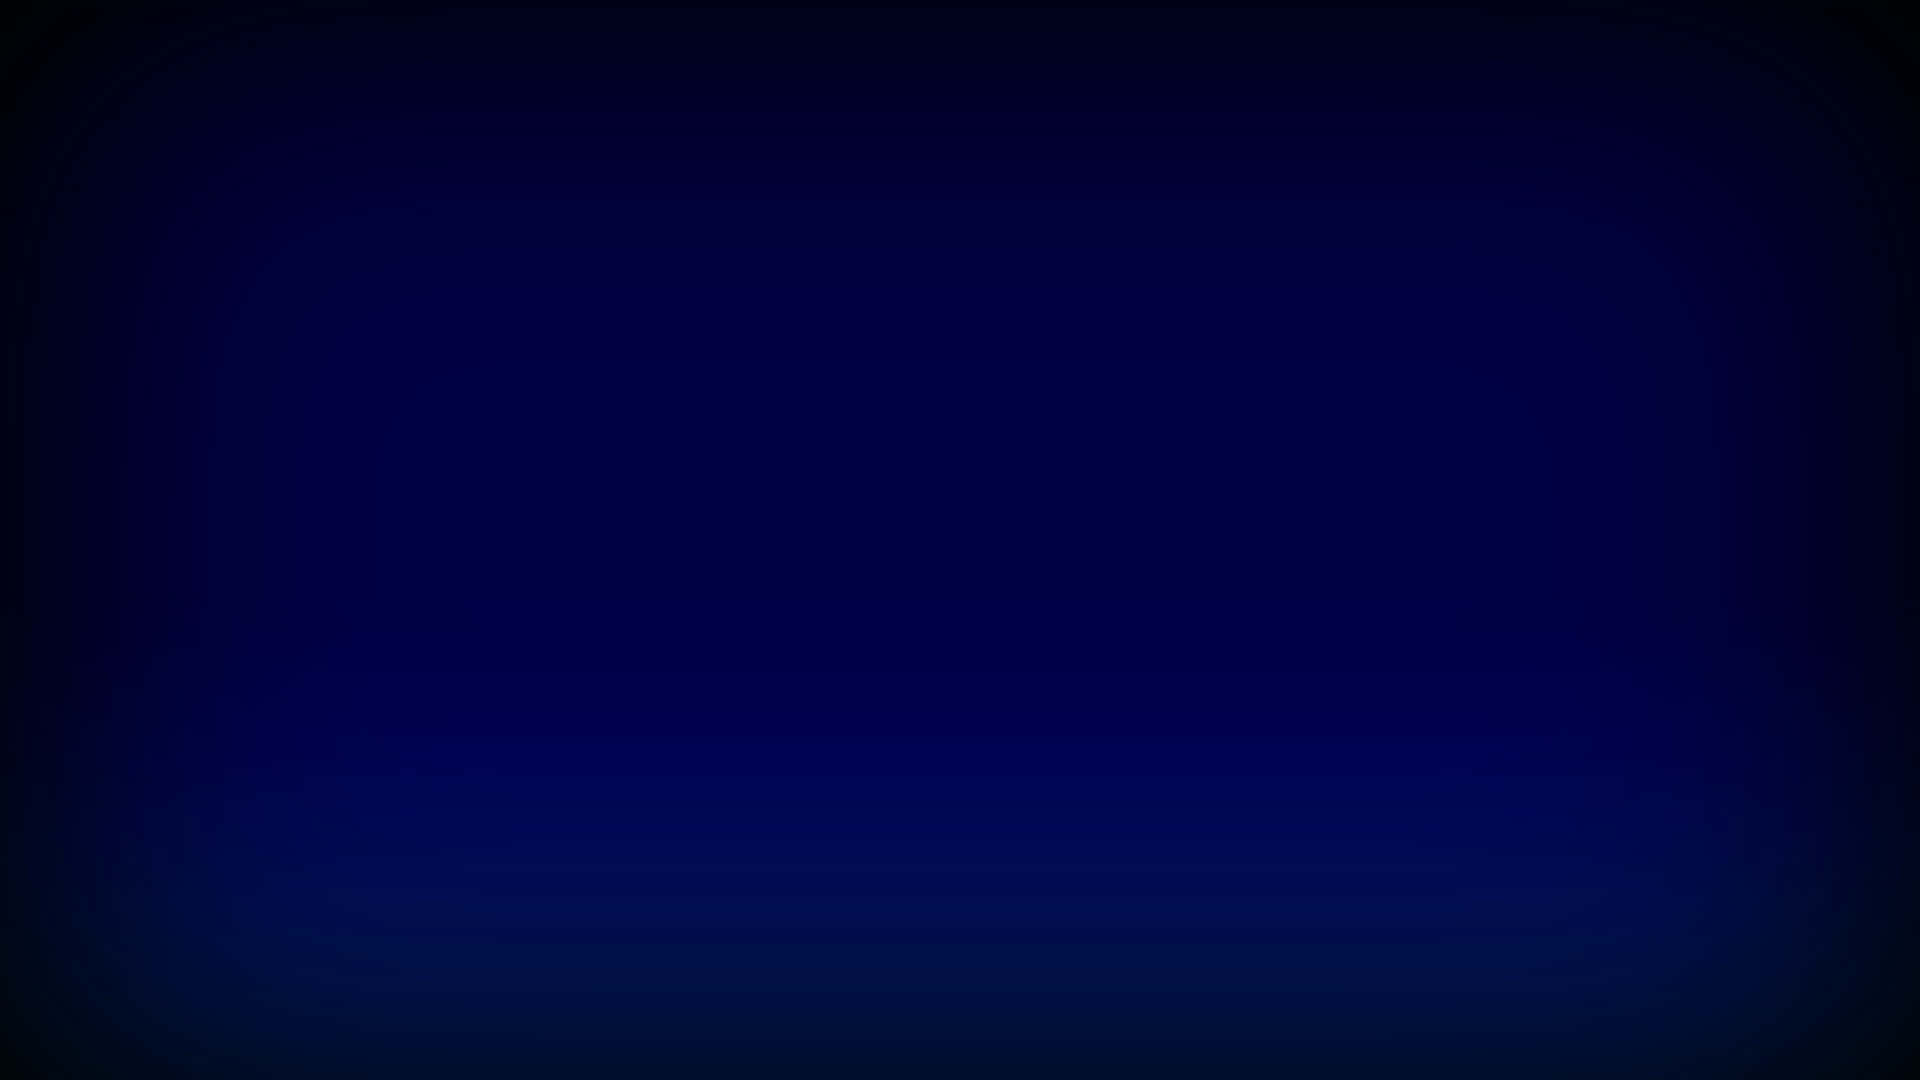 Navy Blue Background With Vignette Effect 3og2ywnkhdzvu9n6 